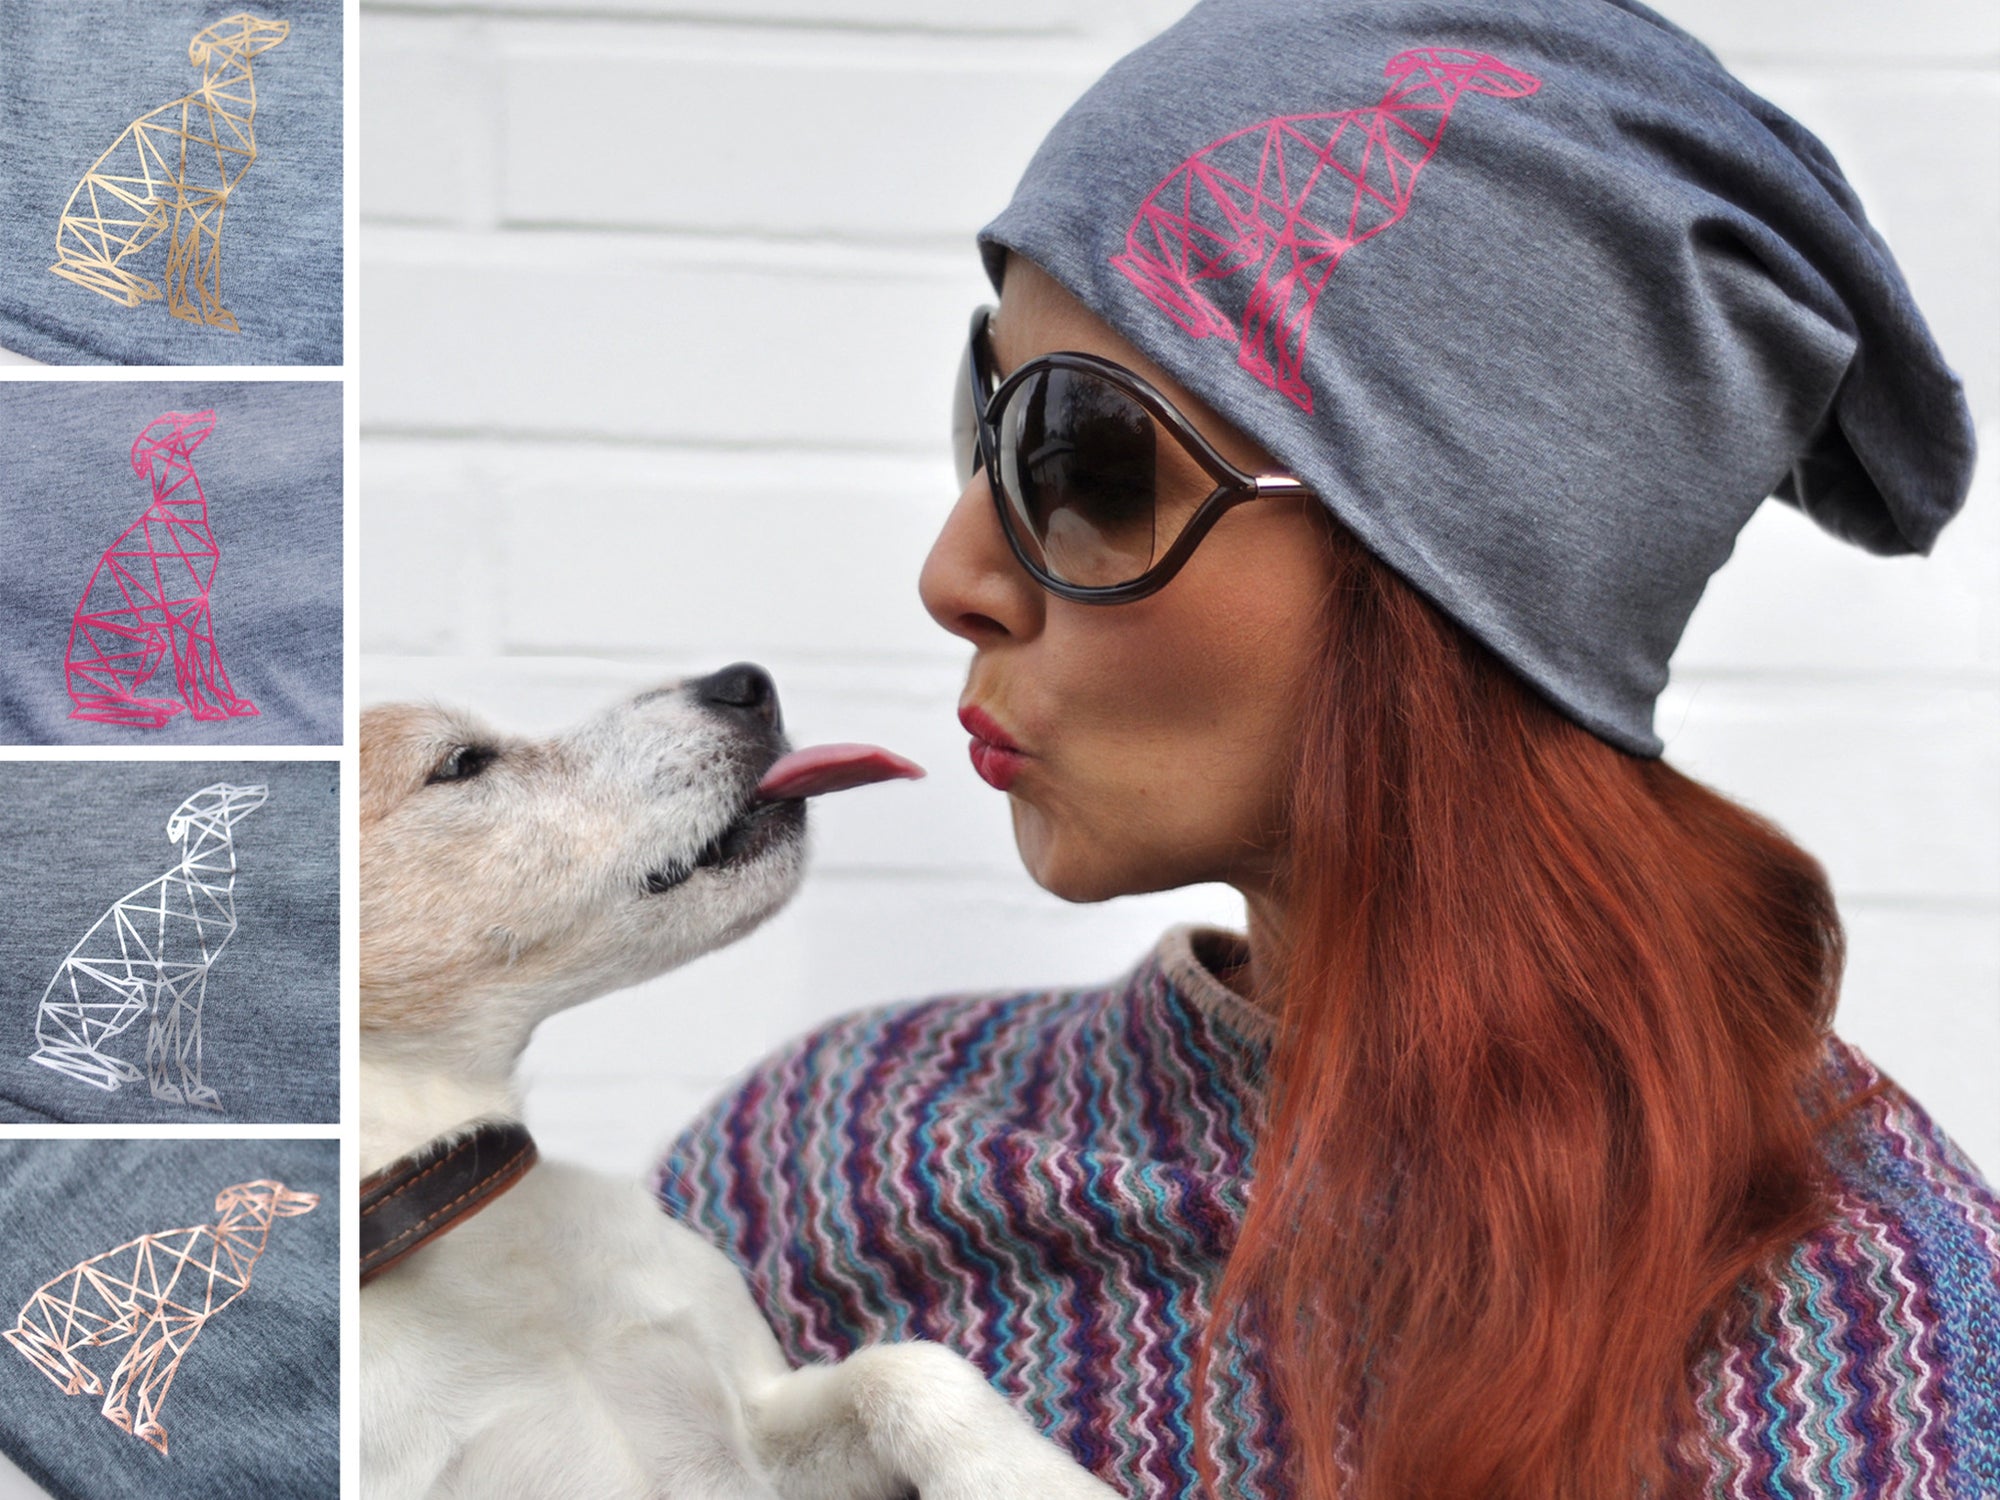 Produkt | paraperro goes Fashion - Beanies mit Hundesilhouette